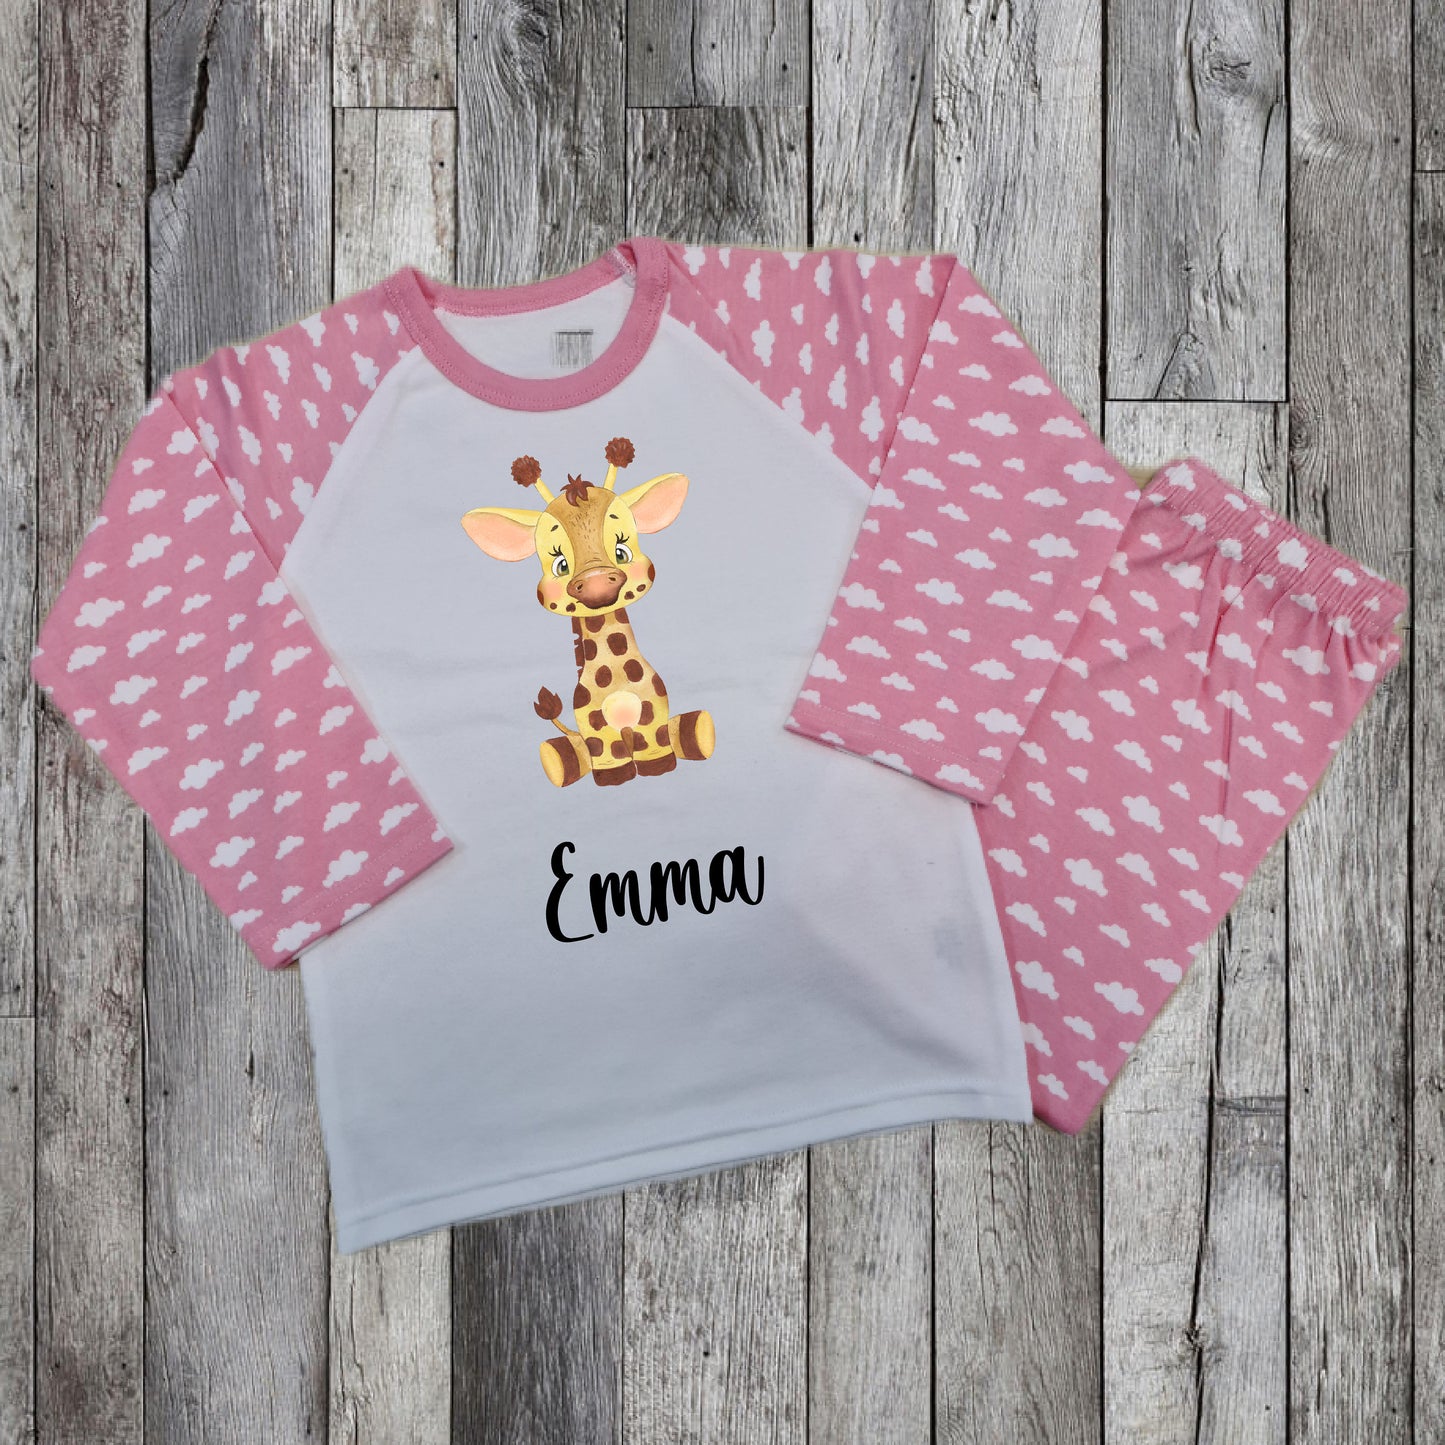 Personalised Baby Giraffe Name Pyjamas - Pink Pyjamas - Custom Made Animal Print PJ'S - Long Sleeve - Clouds - Girls - Cute Print - Custom